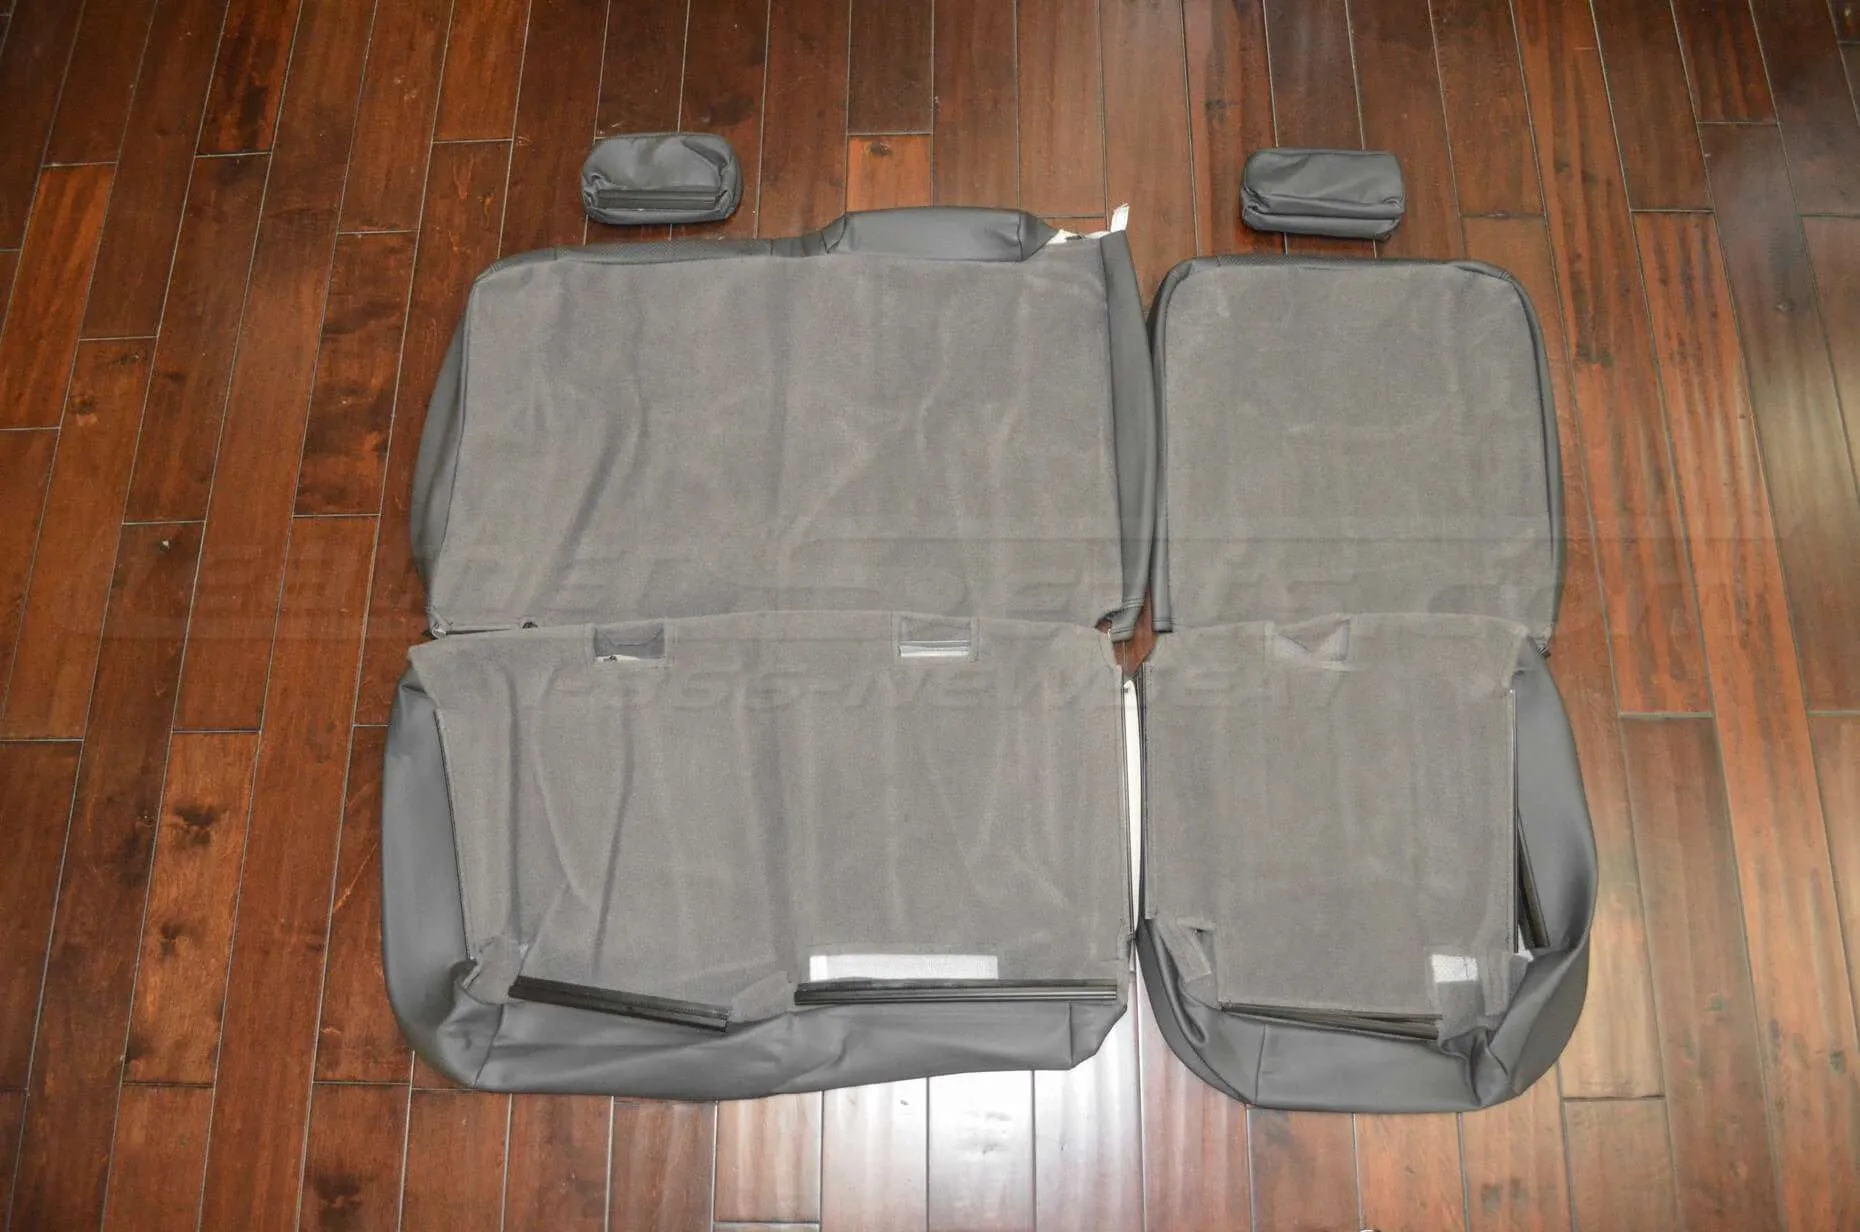 Chevrolet Silverado Upholstery Kit - Graphite - Back view of rear seats